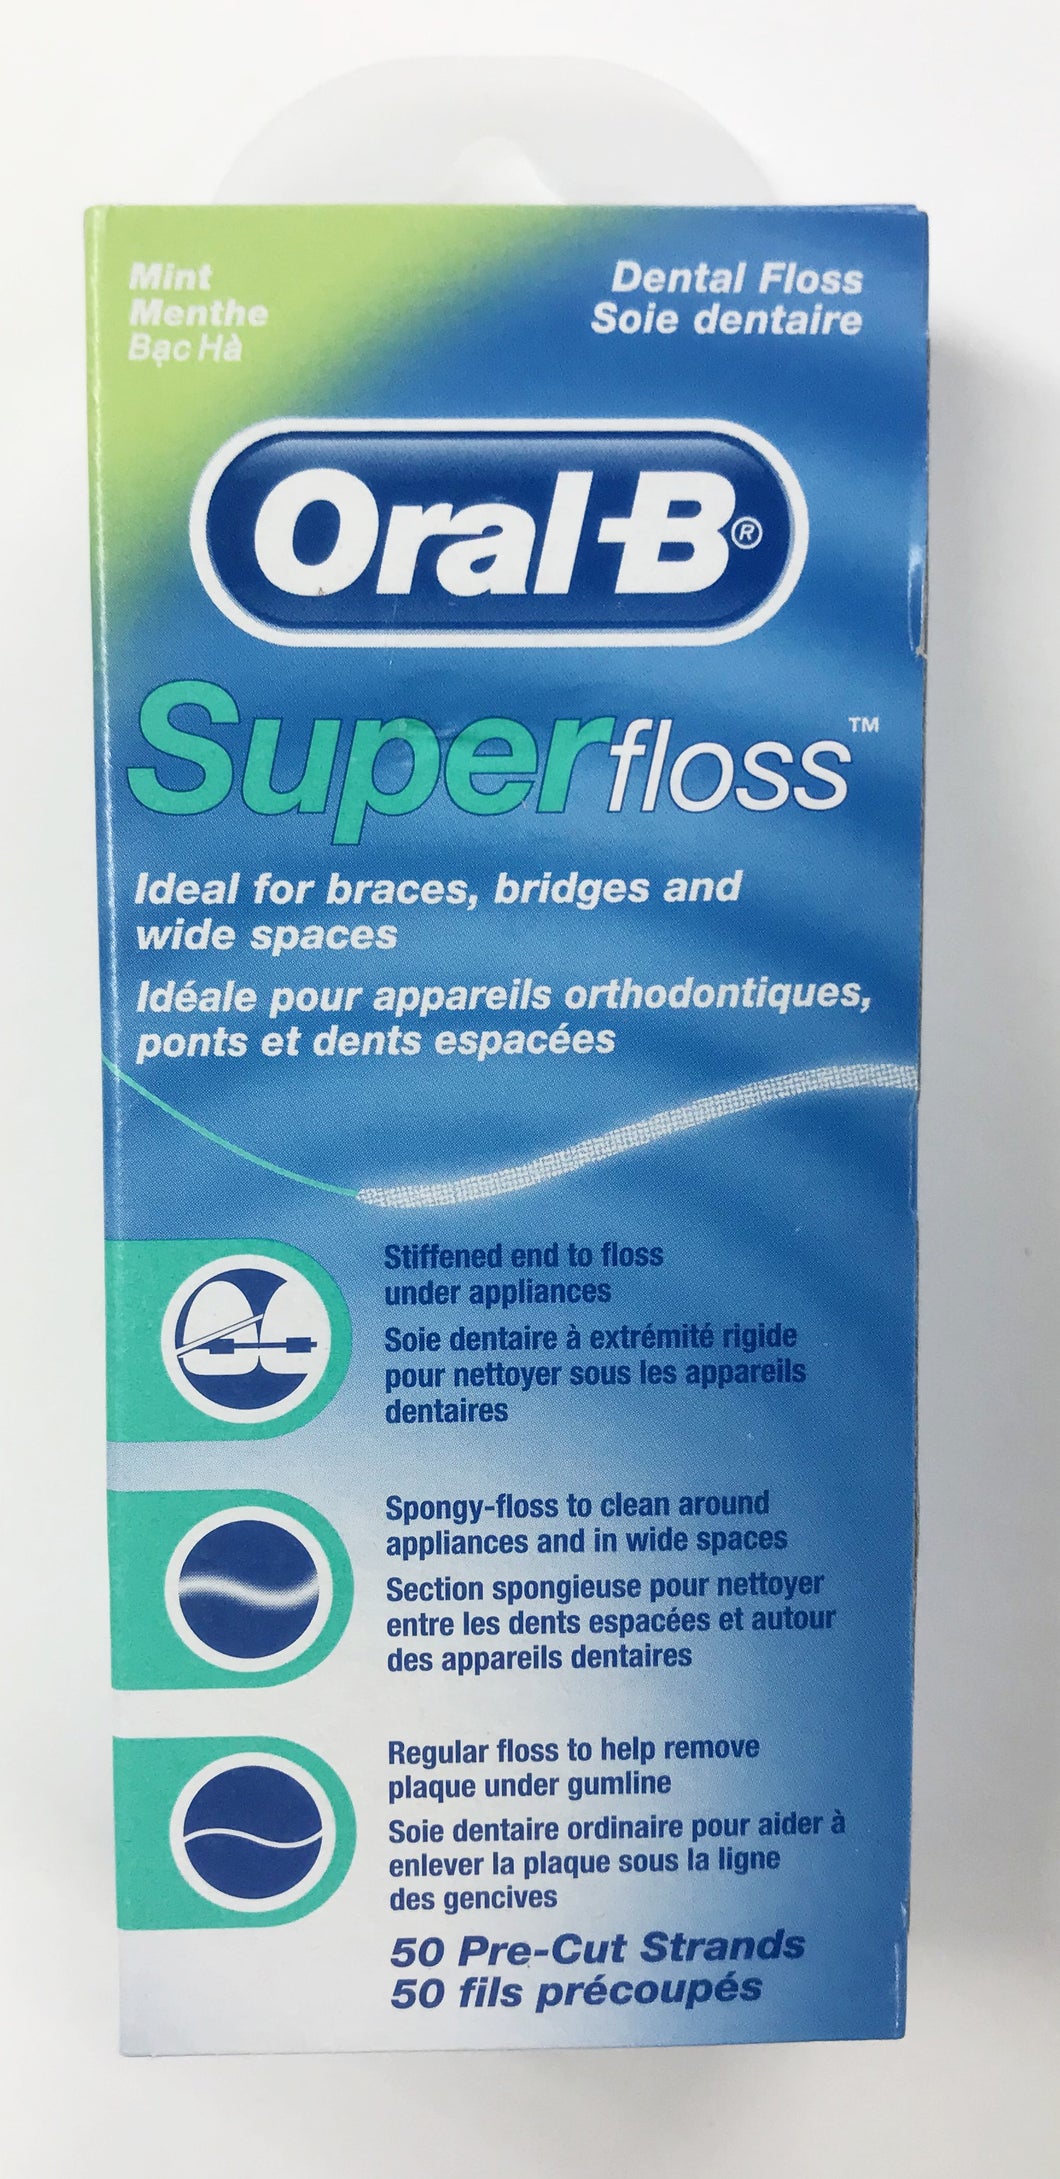 Oral-B Super Floss Mint